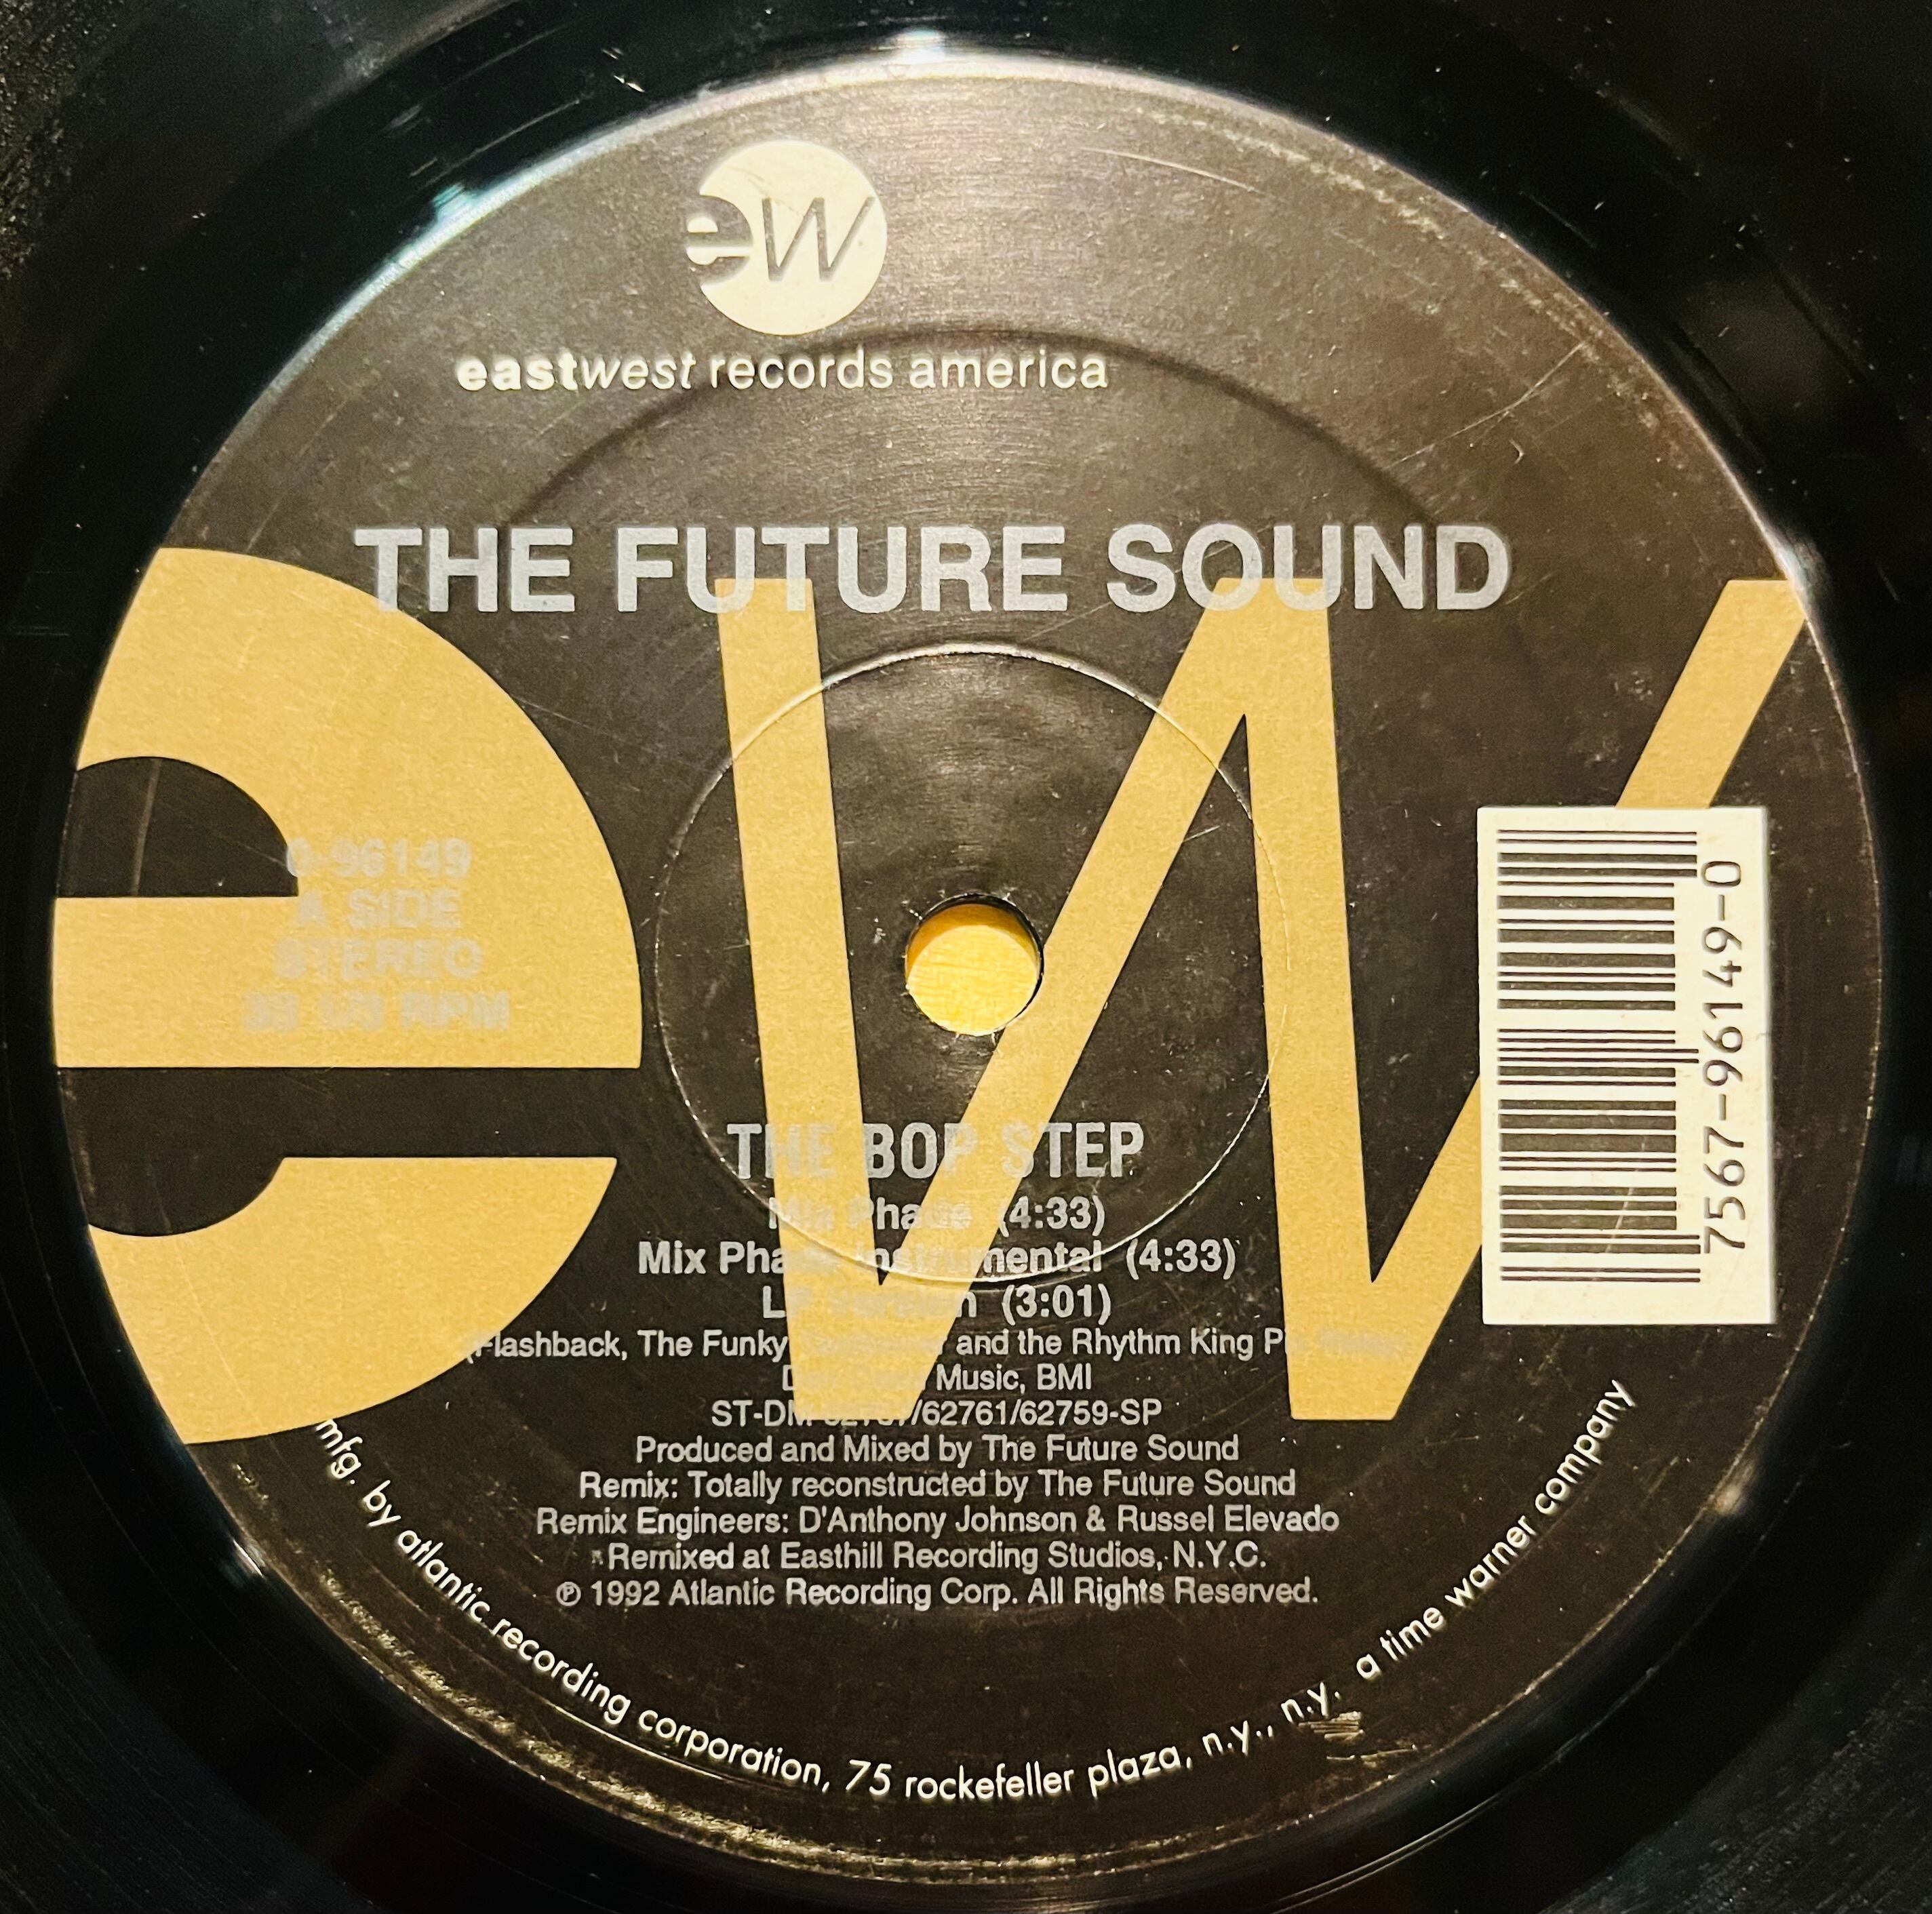 The Future Sound – The Bop Step (12